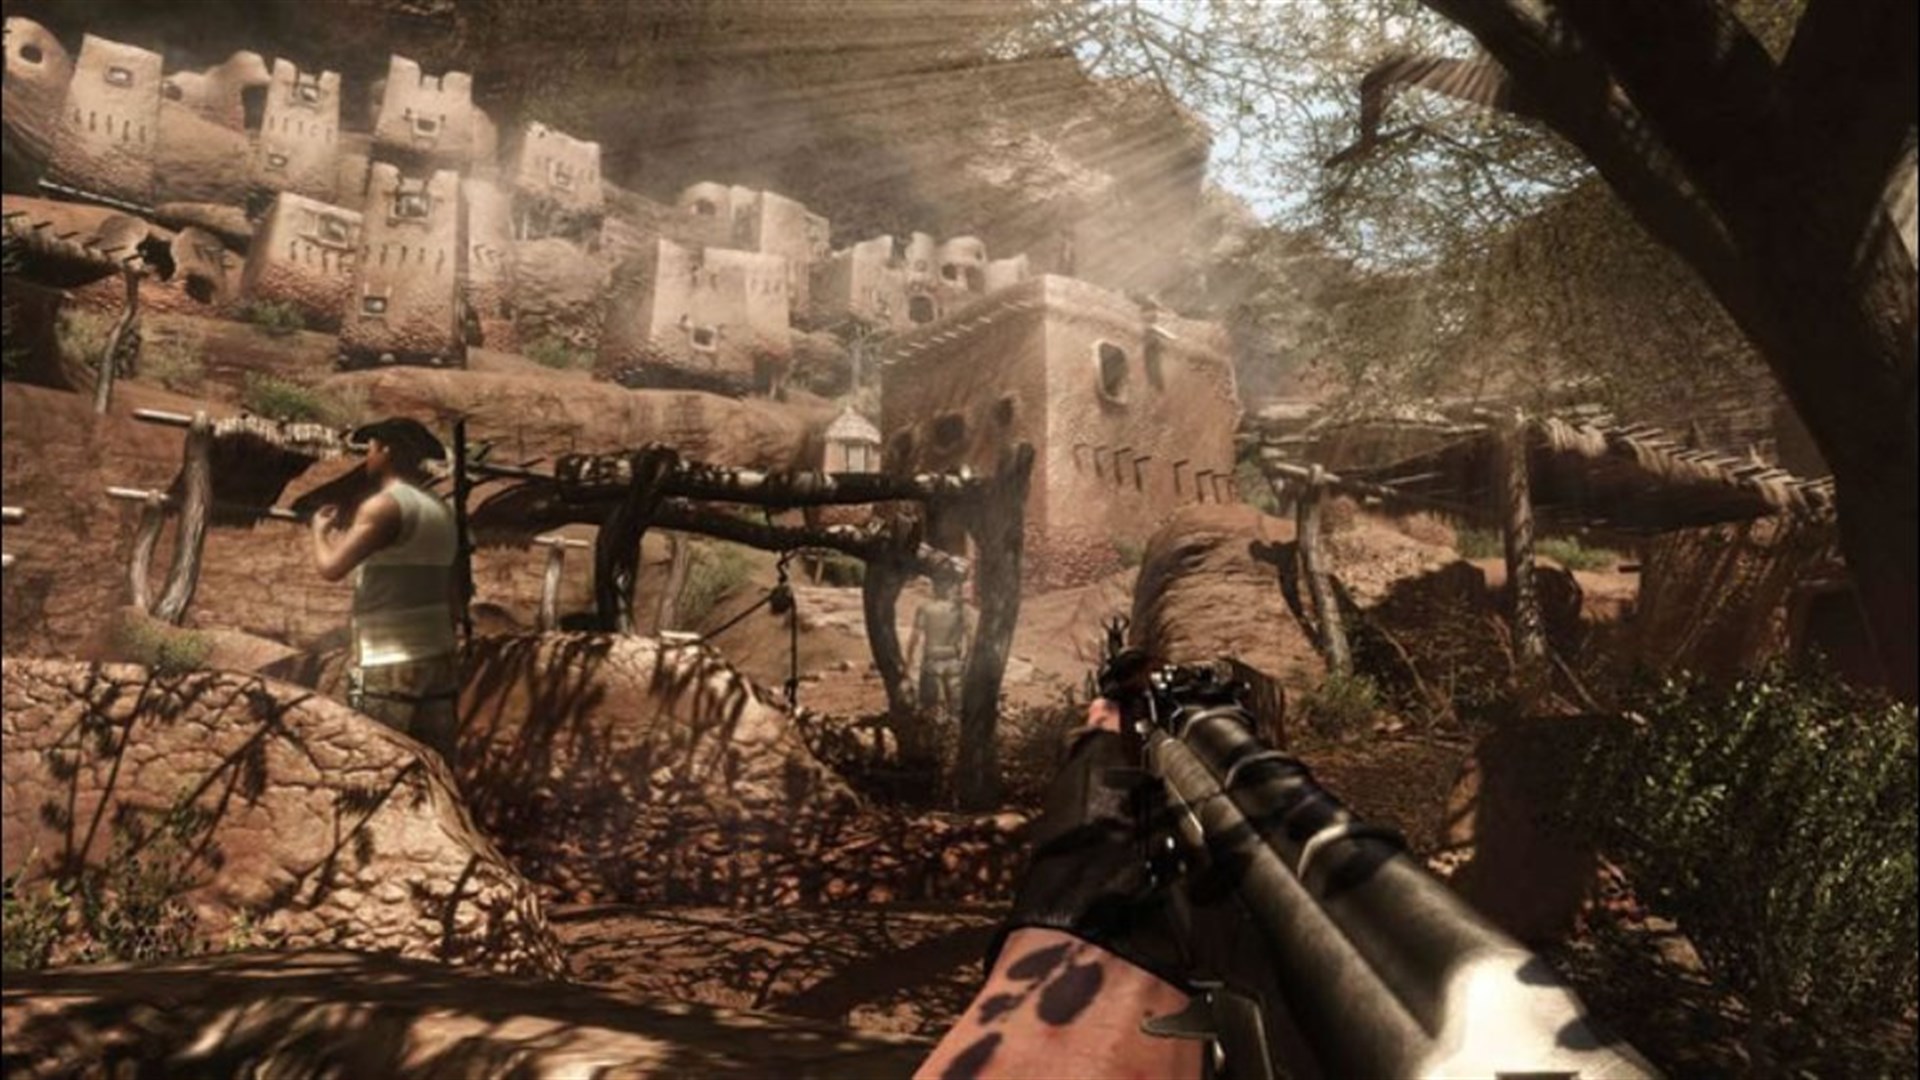 Far Cry 2 on PS3 — price history, screenshots, discounts • USA